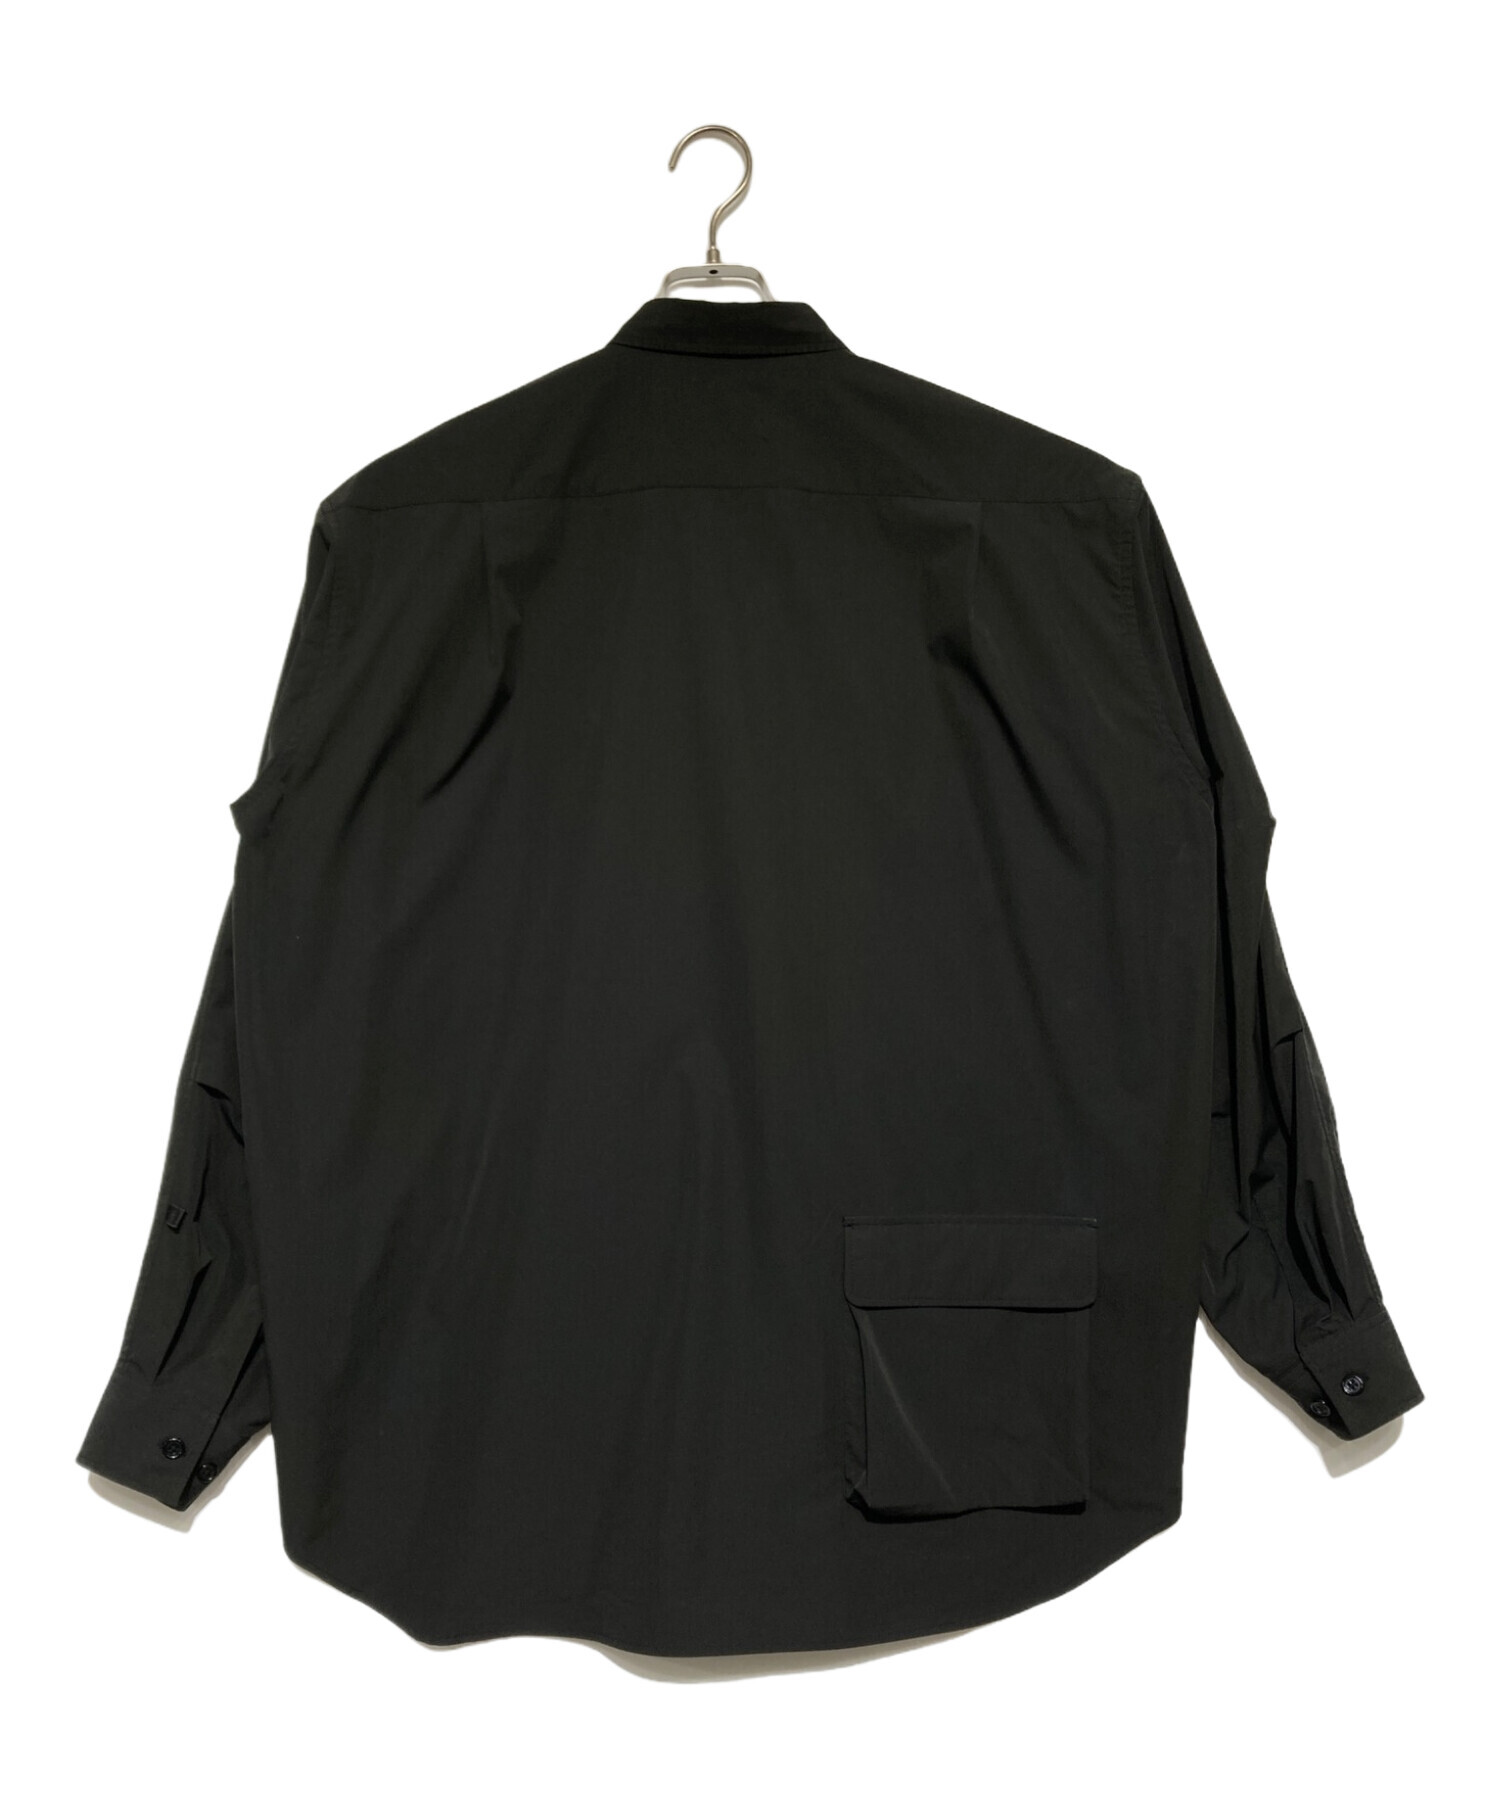 DAIWA PIER39 (ダイワ ピア39) Mulch Pocket Easy Shirts(マルチ ポケット イージー シャツ) ブラック  サイズ:M